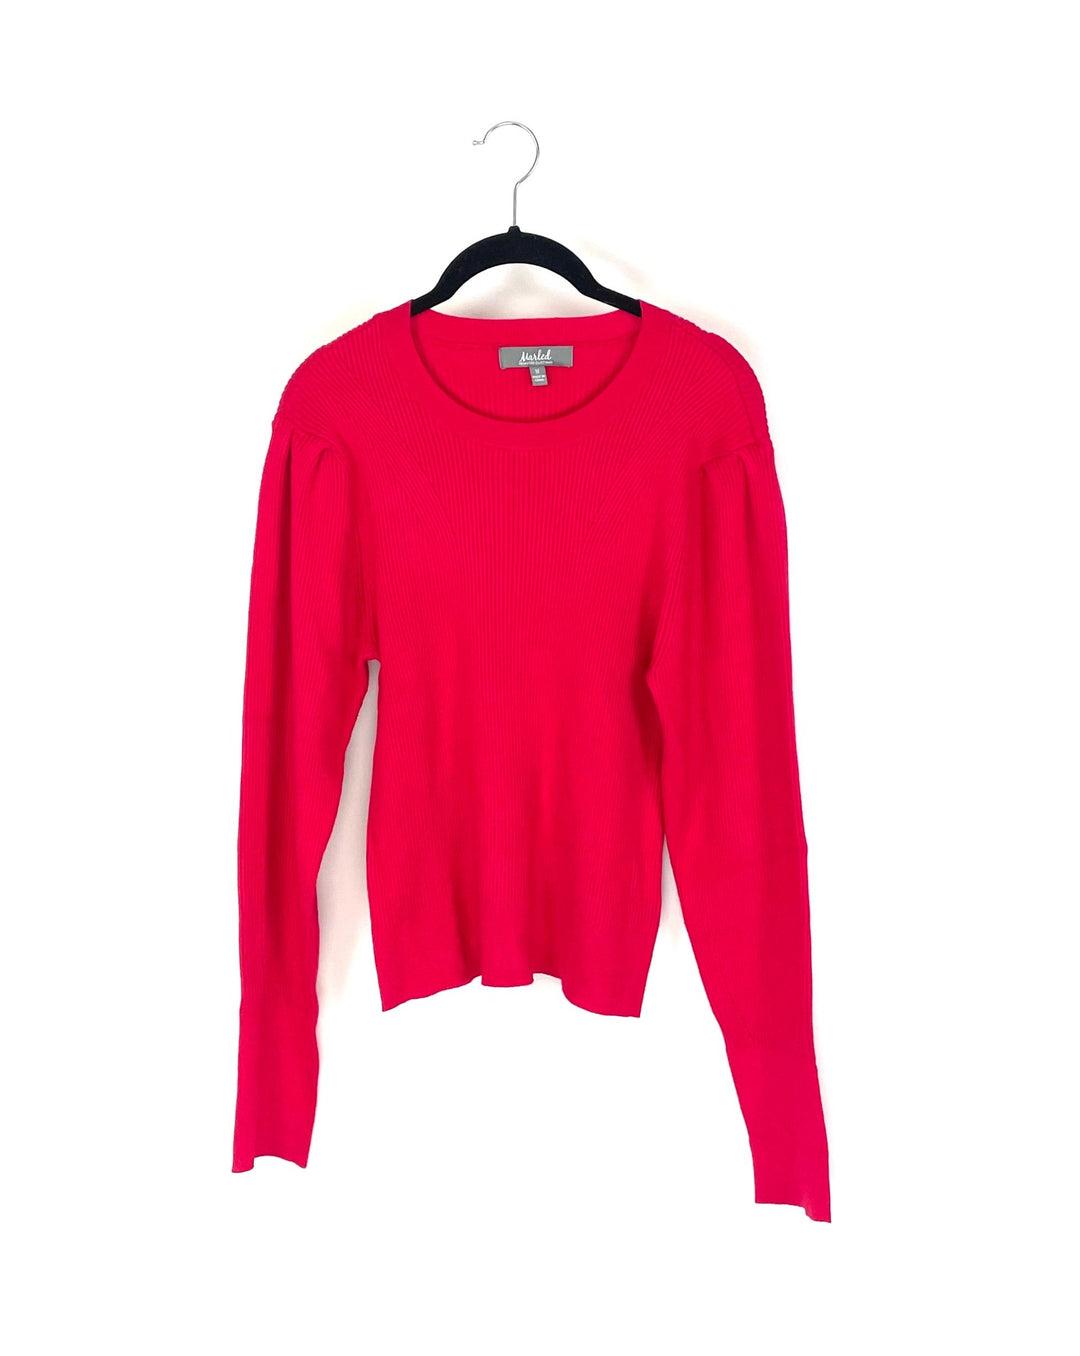 Marled Red Sweater - Medium